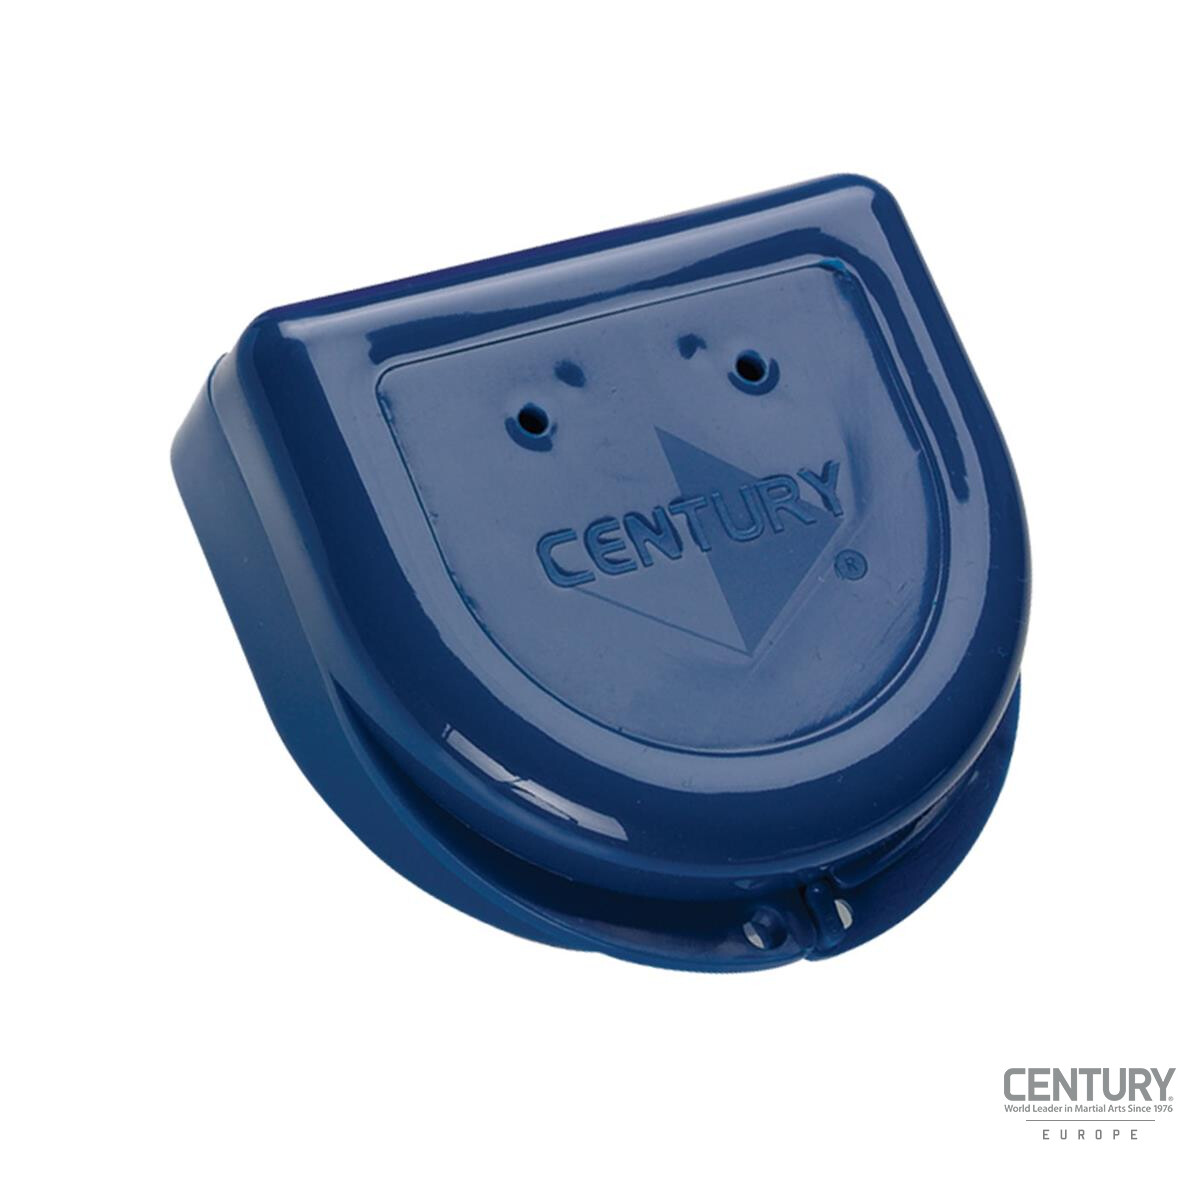 CENTURY Mouthguard Case Blue